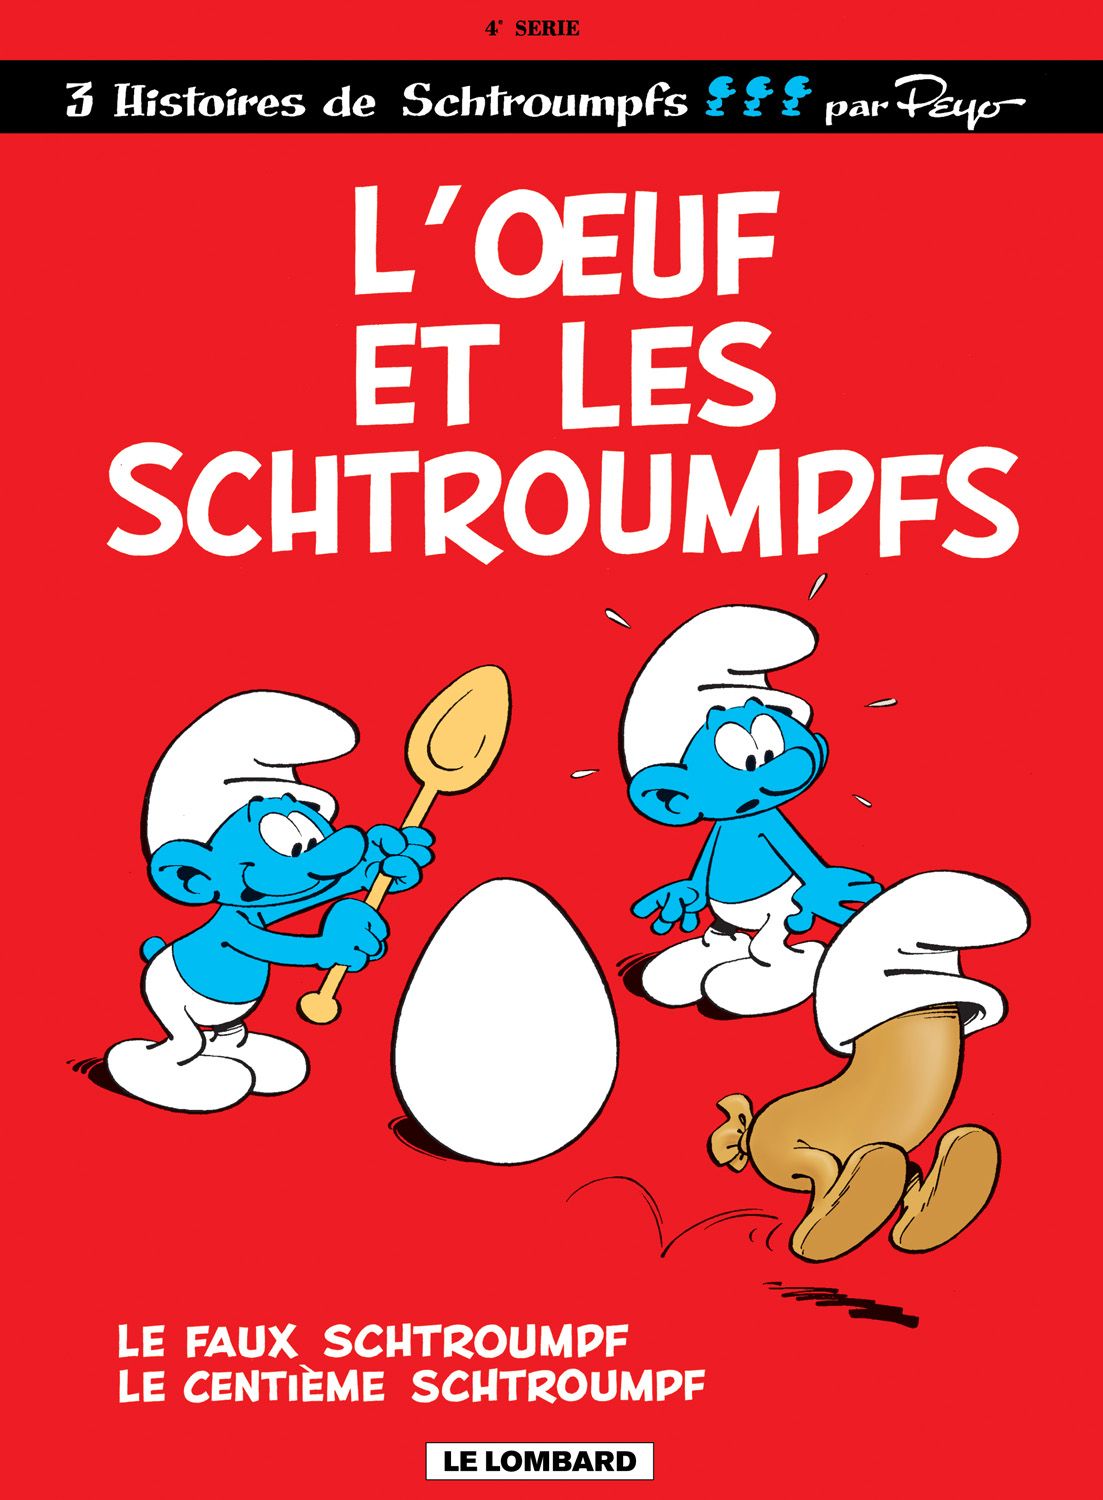 Belgian comic strip the smurfs